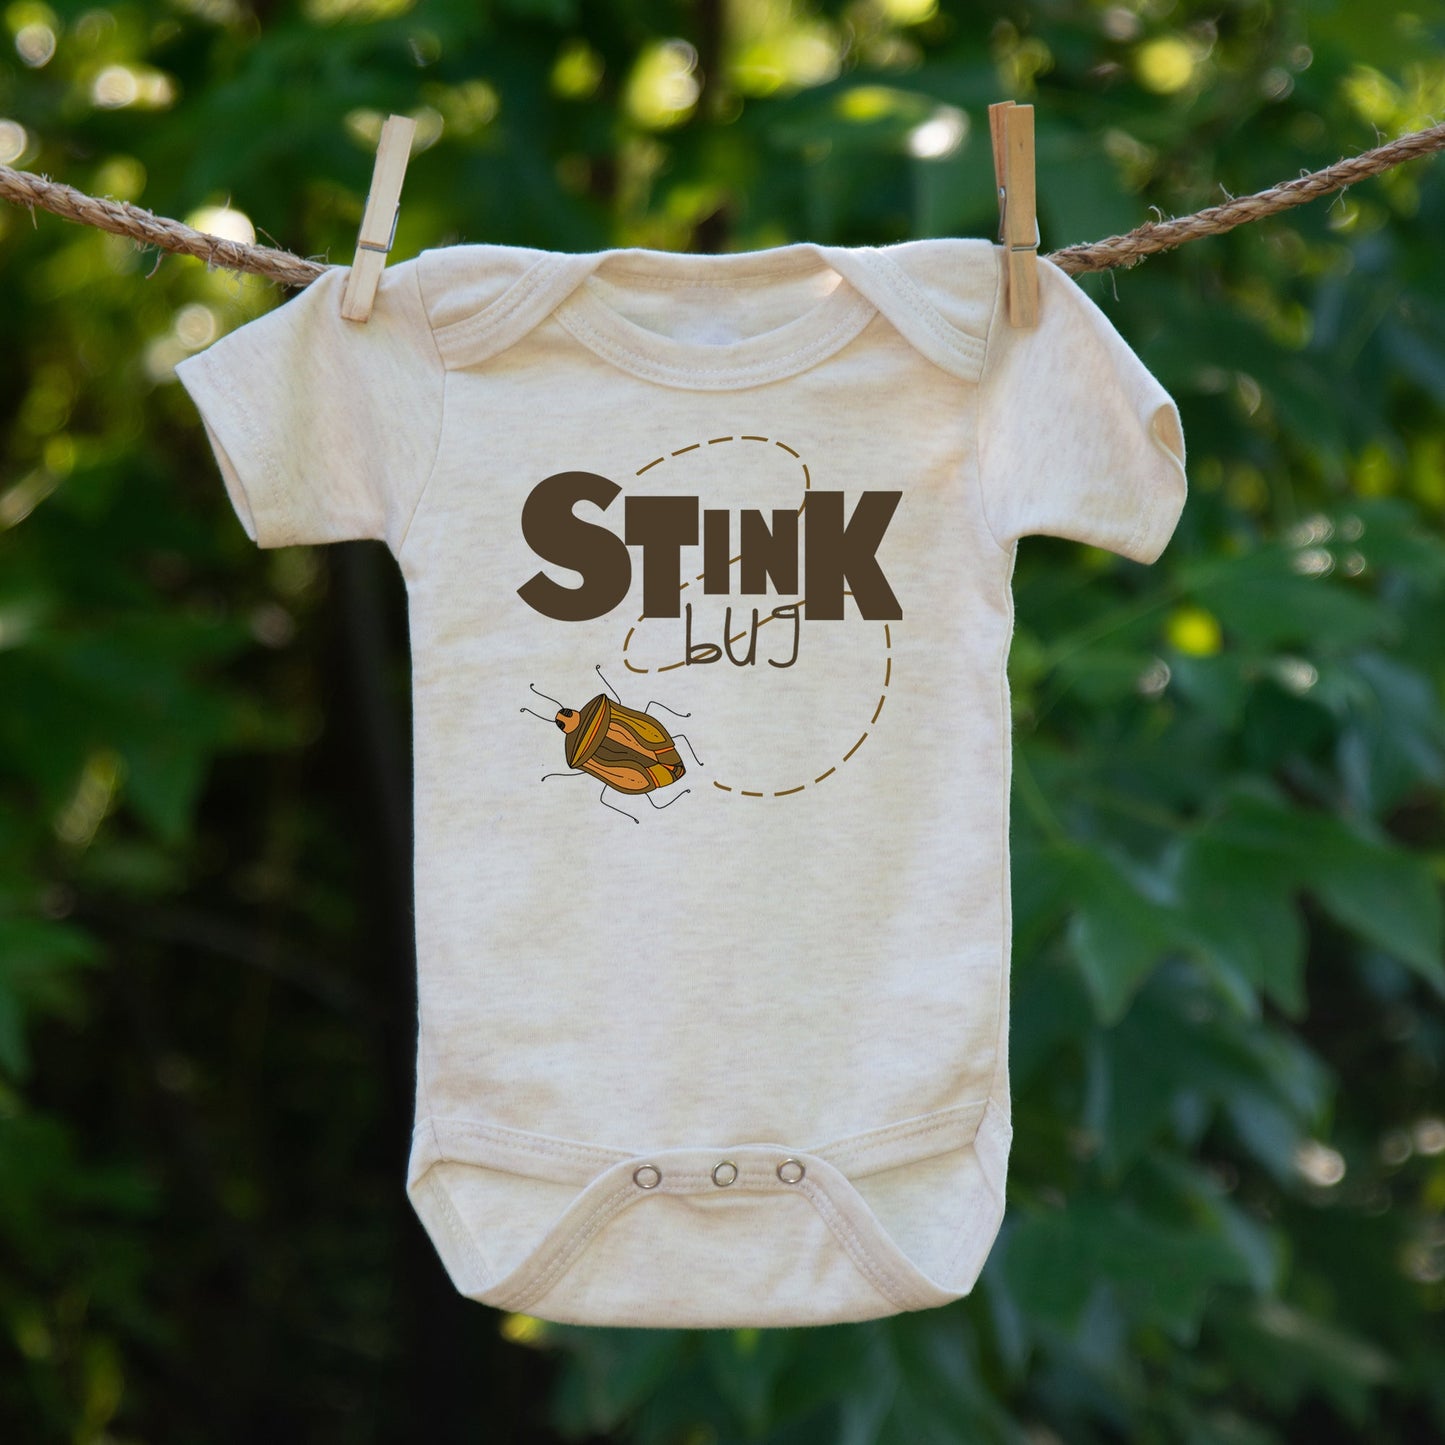 "Stink bug" body suit